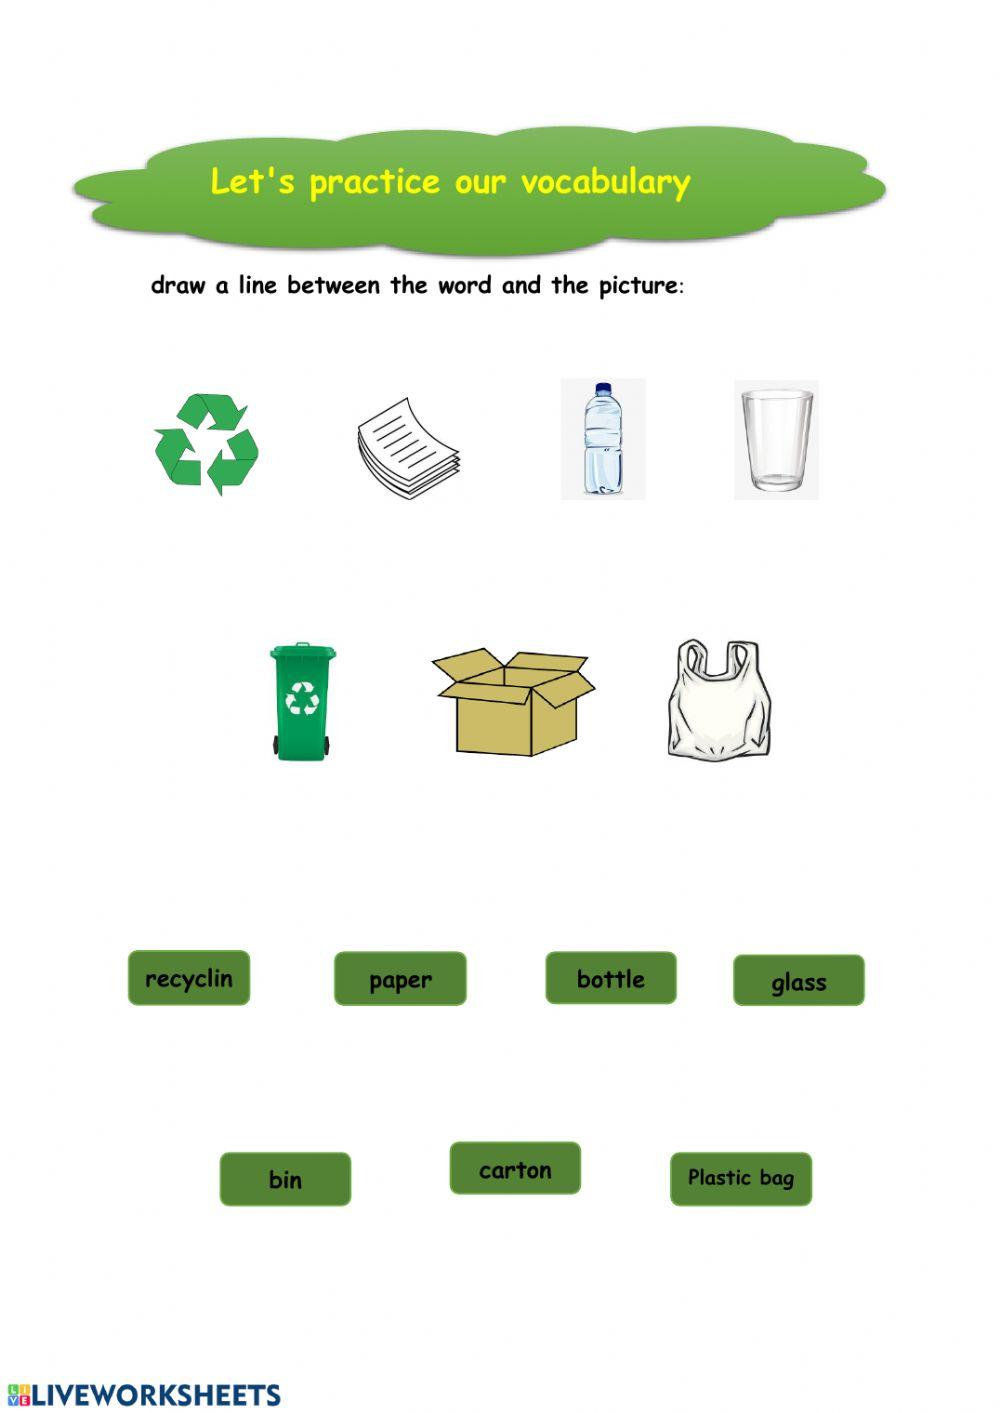 Recycling vocabulary